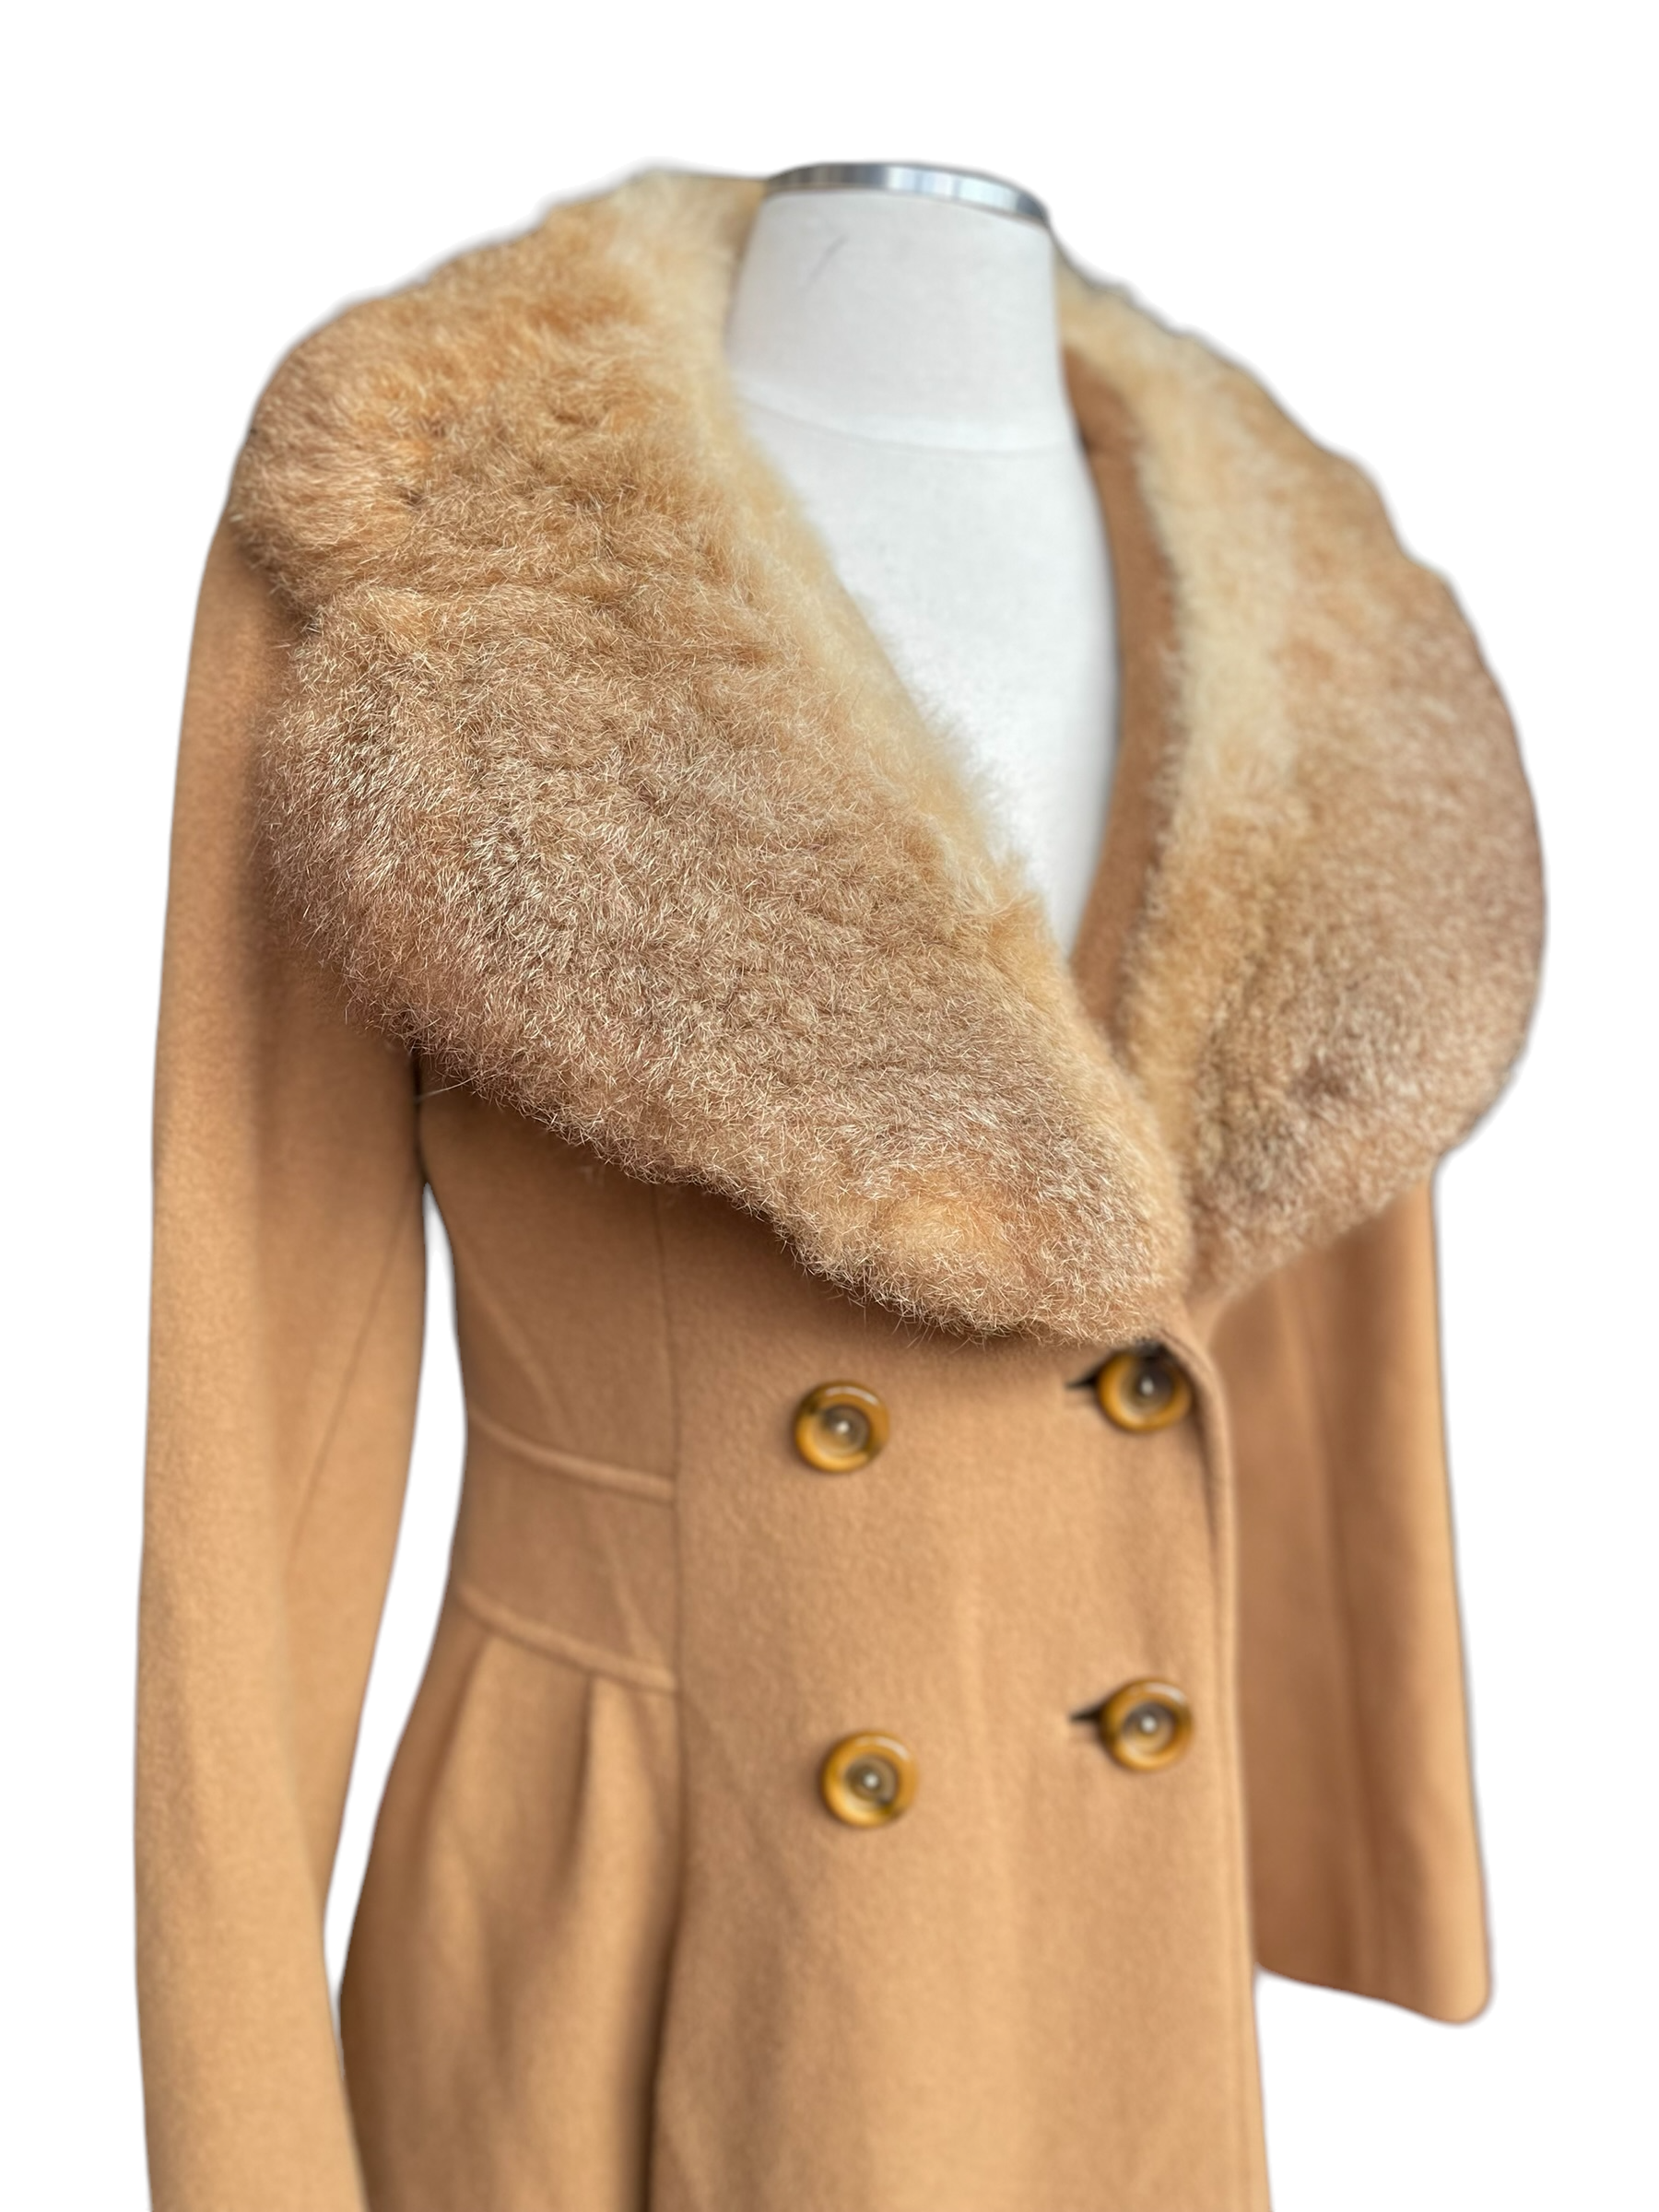 Right shoulder close up view of Vintage 1960s Fashionbilt Wool Coat with Fur Collar | Barn Owl Vintage | Seattle True Vintage